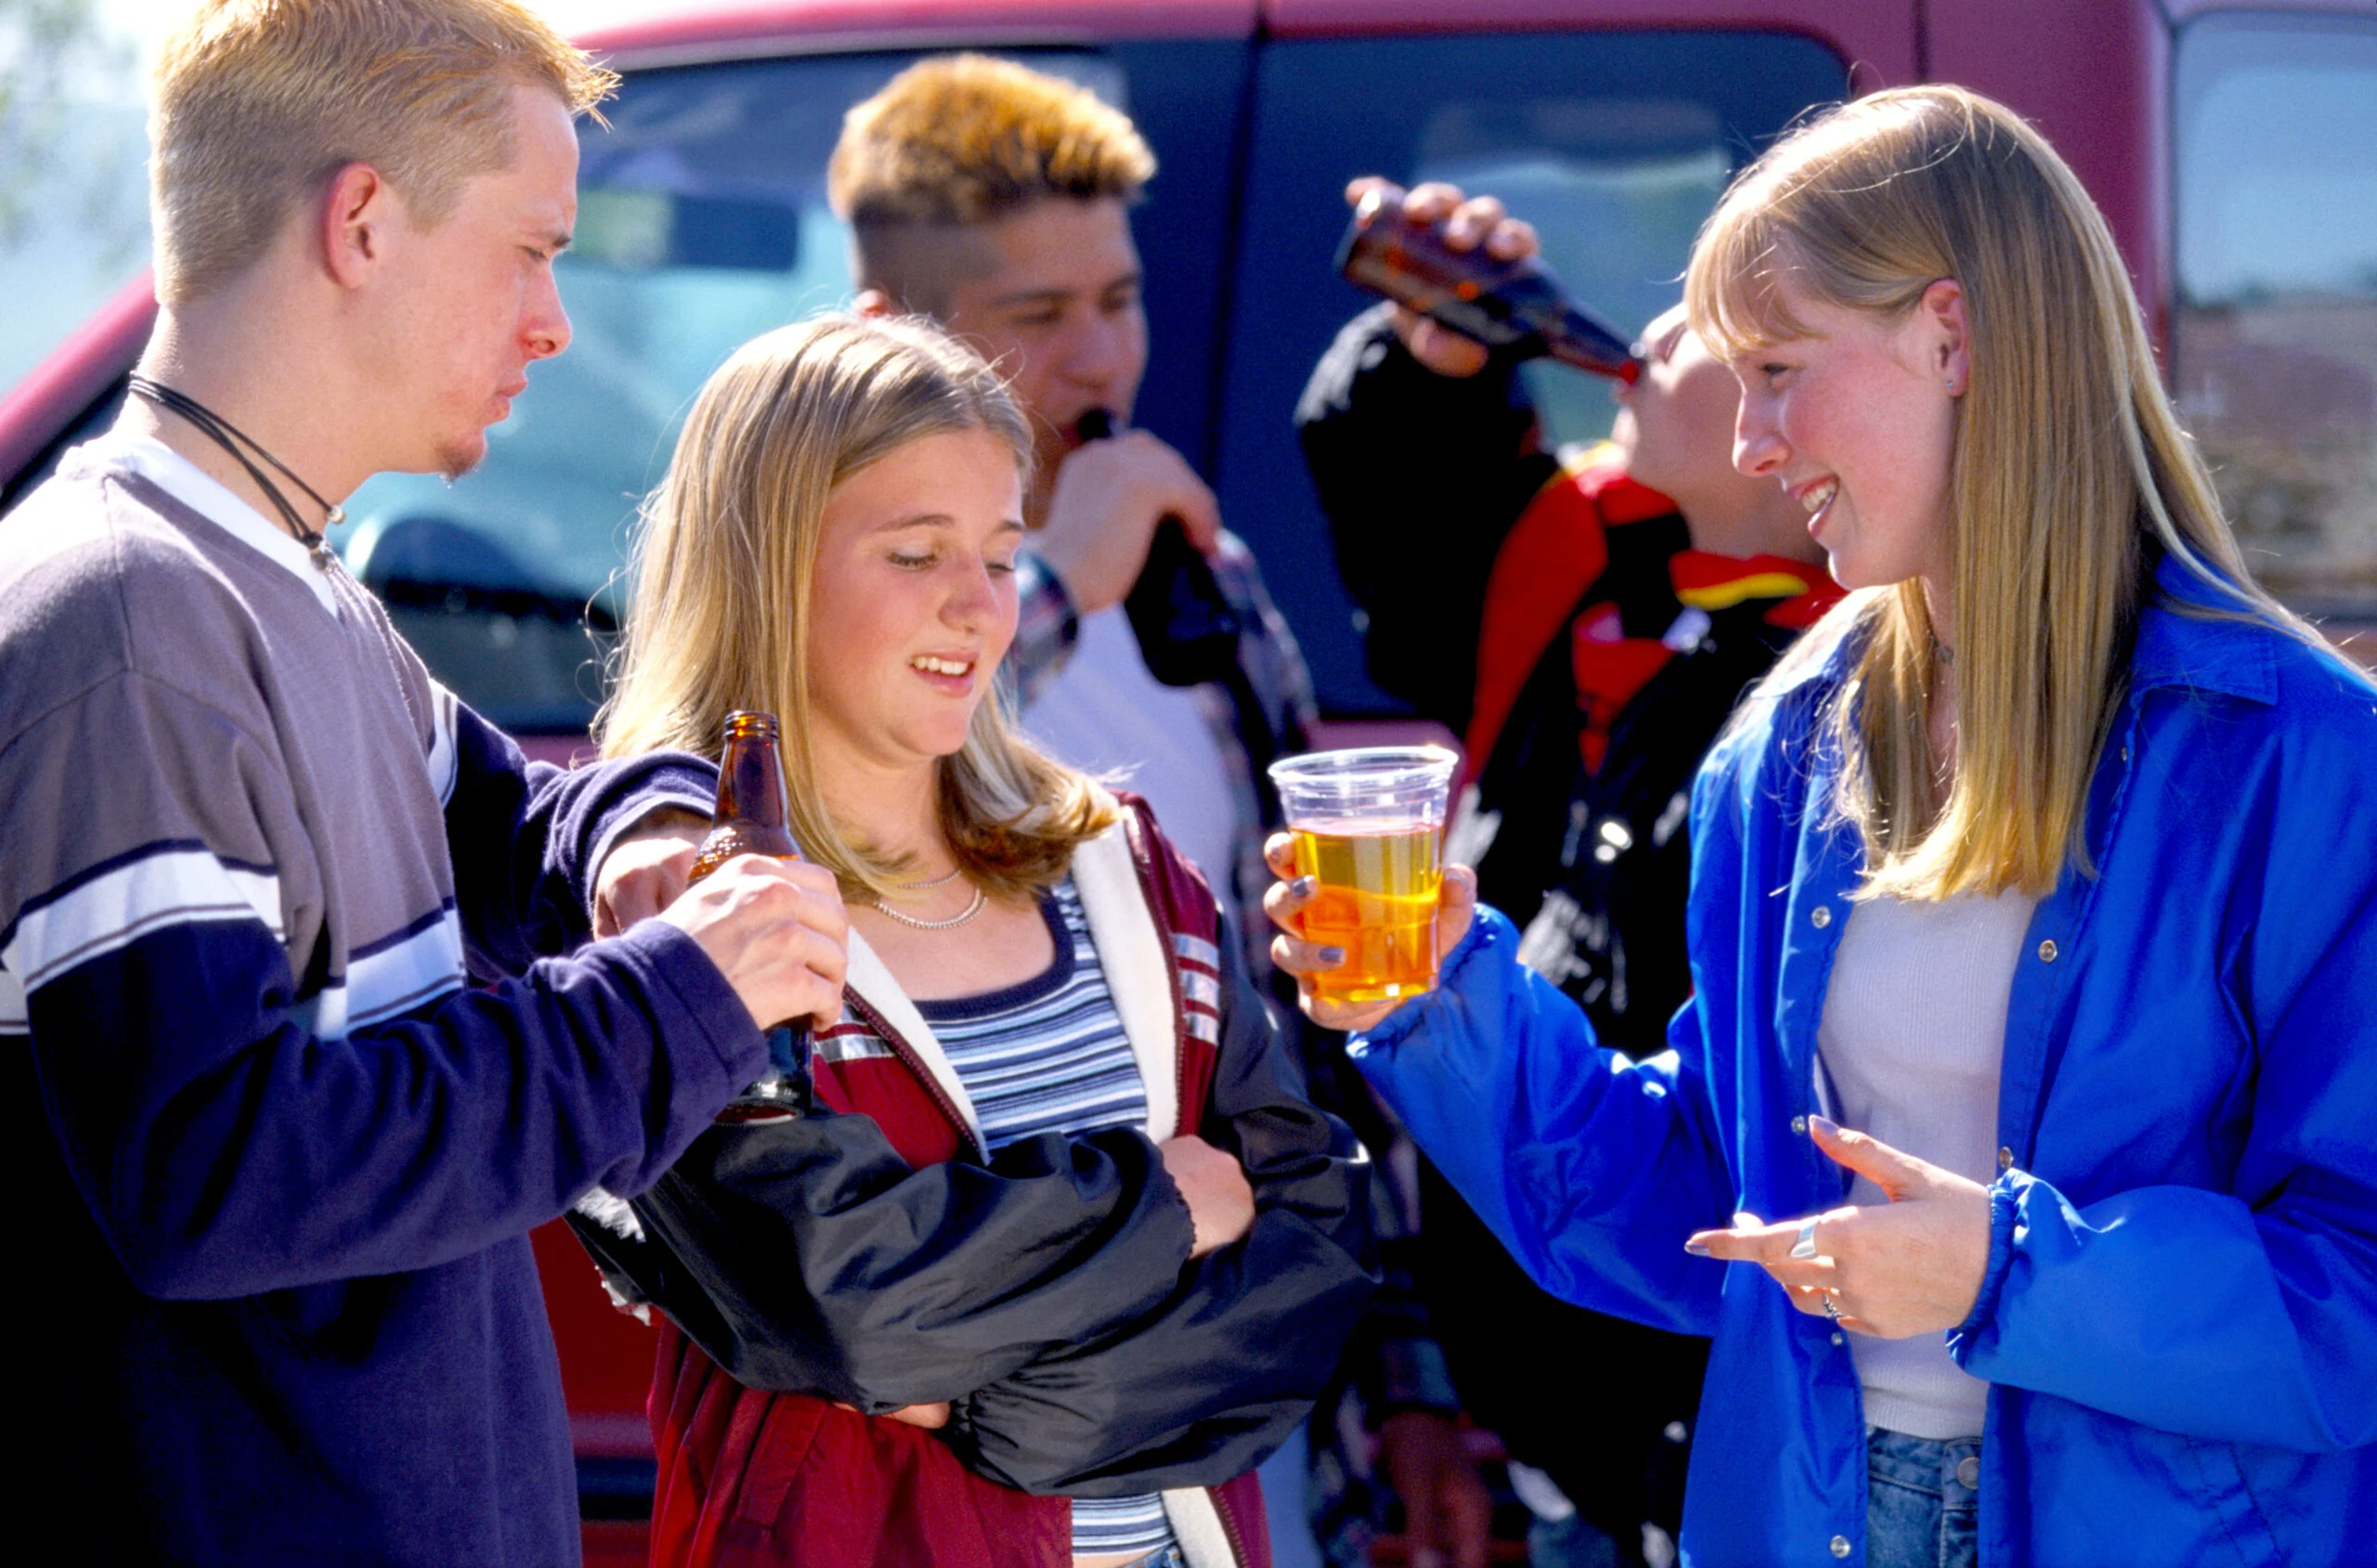 Teens Pressuring Girl To Drink